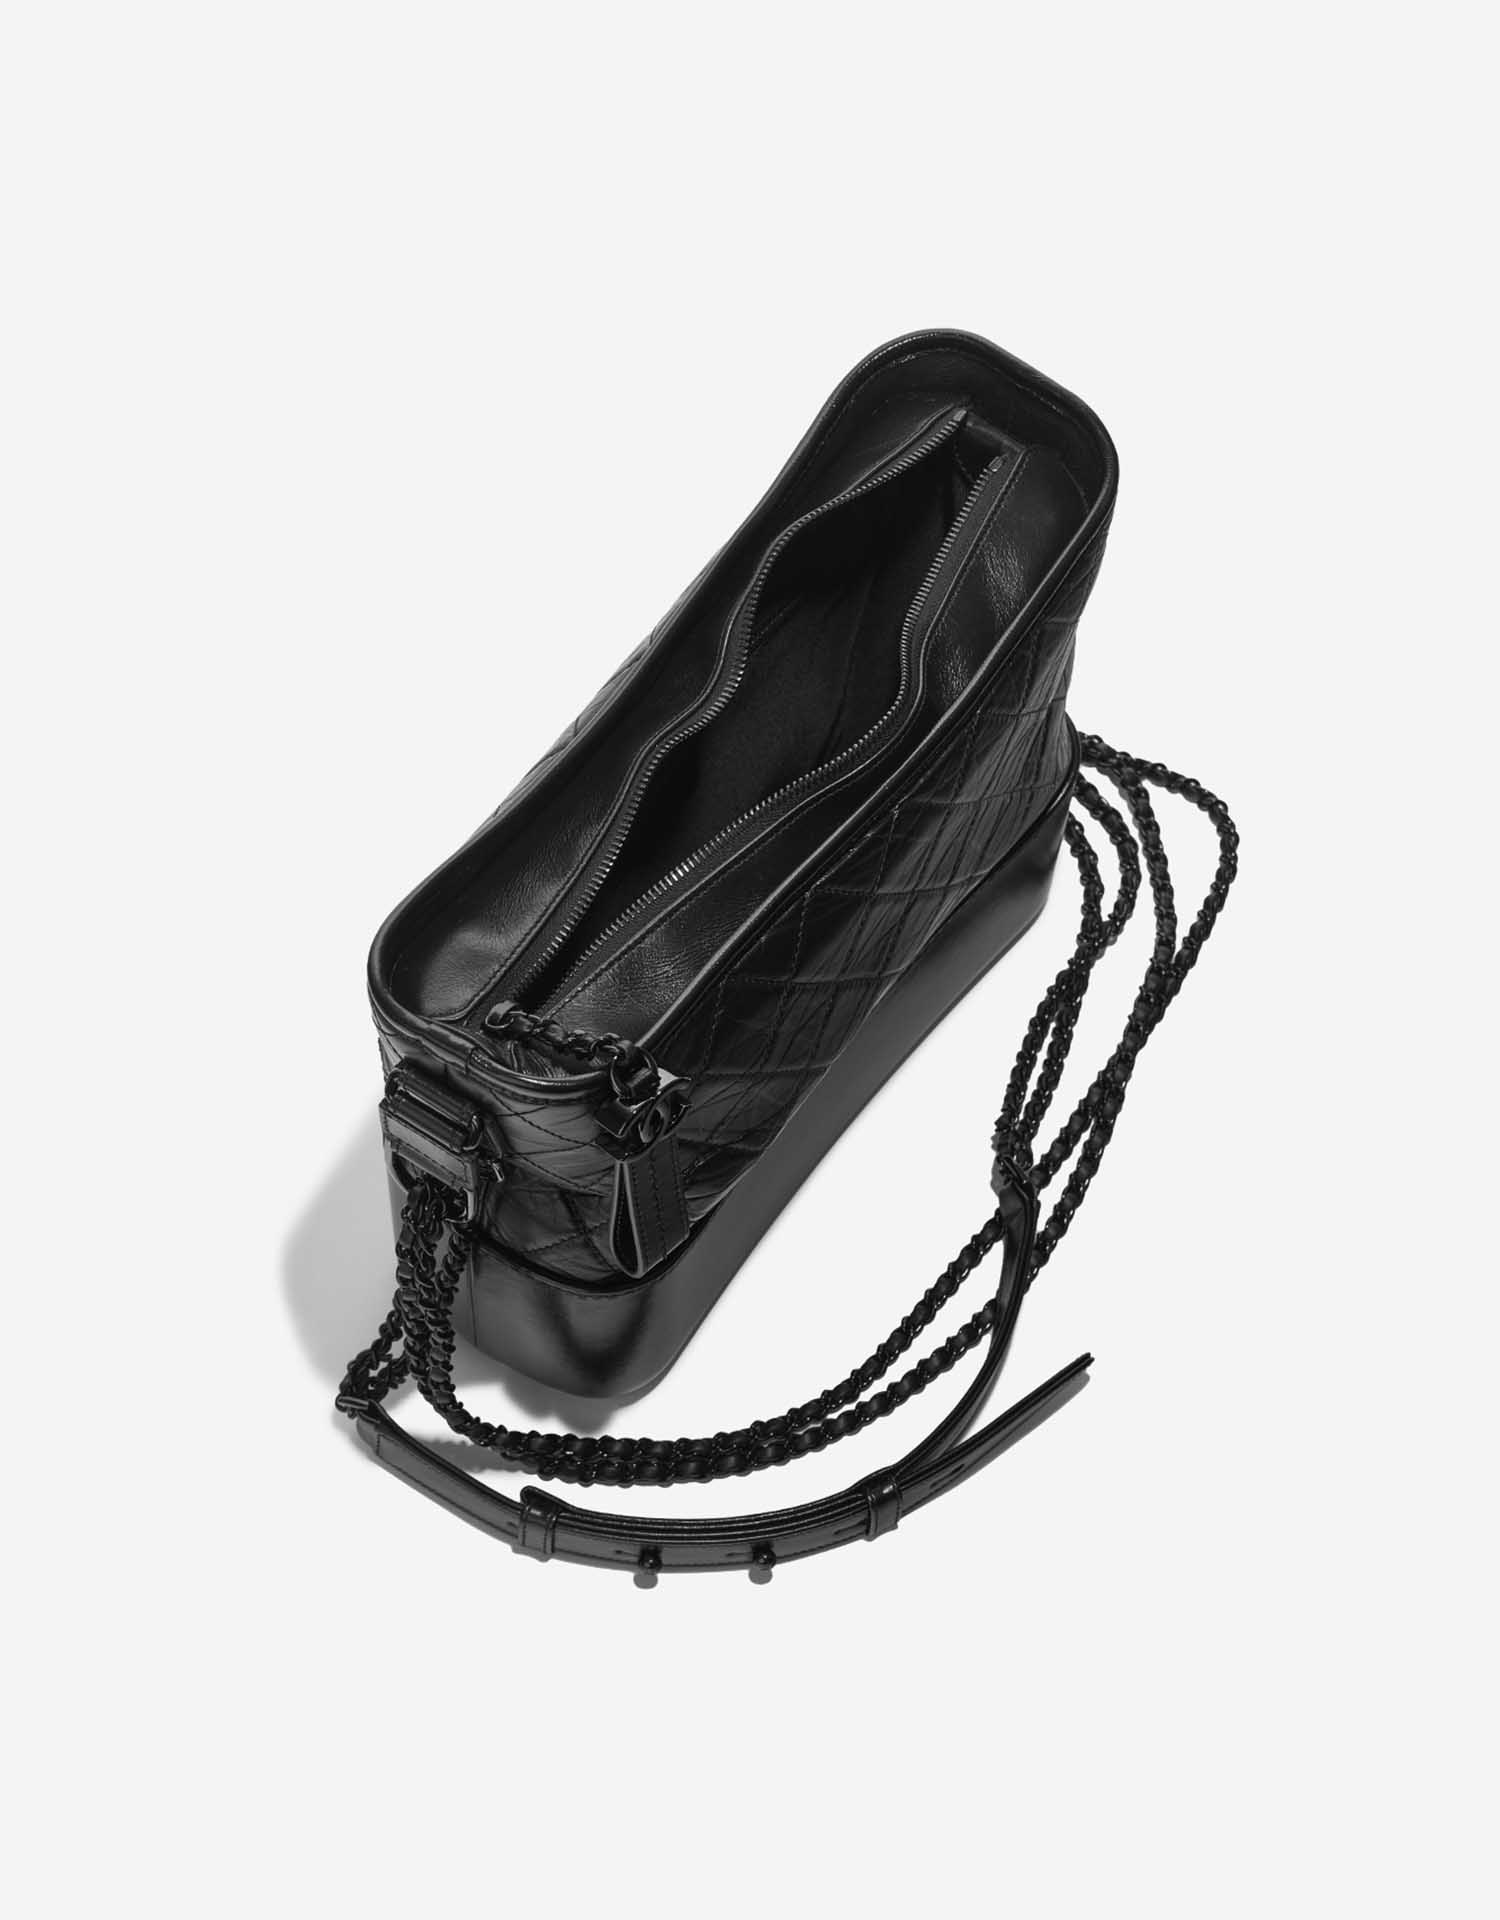 Pre-owned Chanel bag Gabrielle Large Calf Black Black Inside | Sell your designer bag on Saclab.com